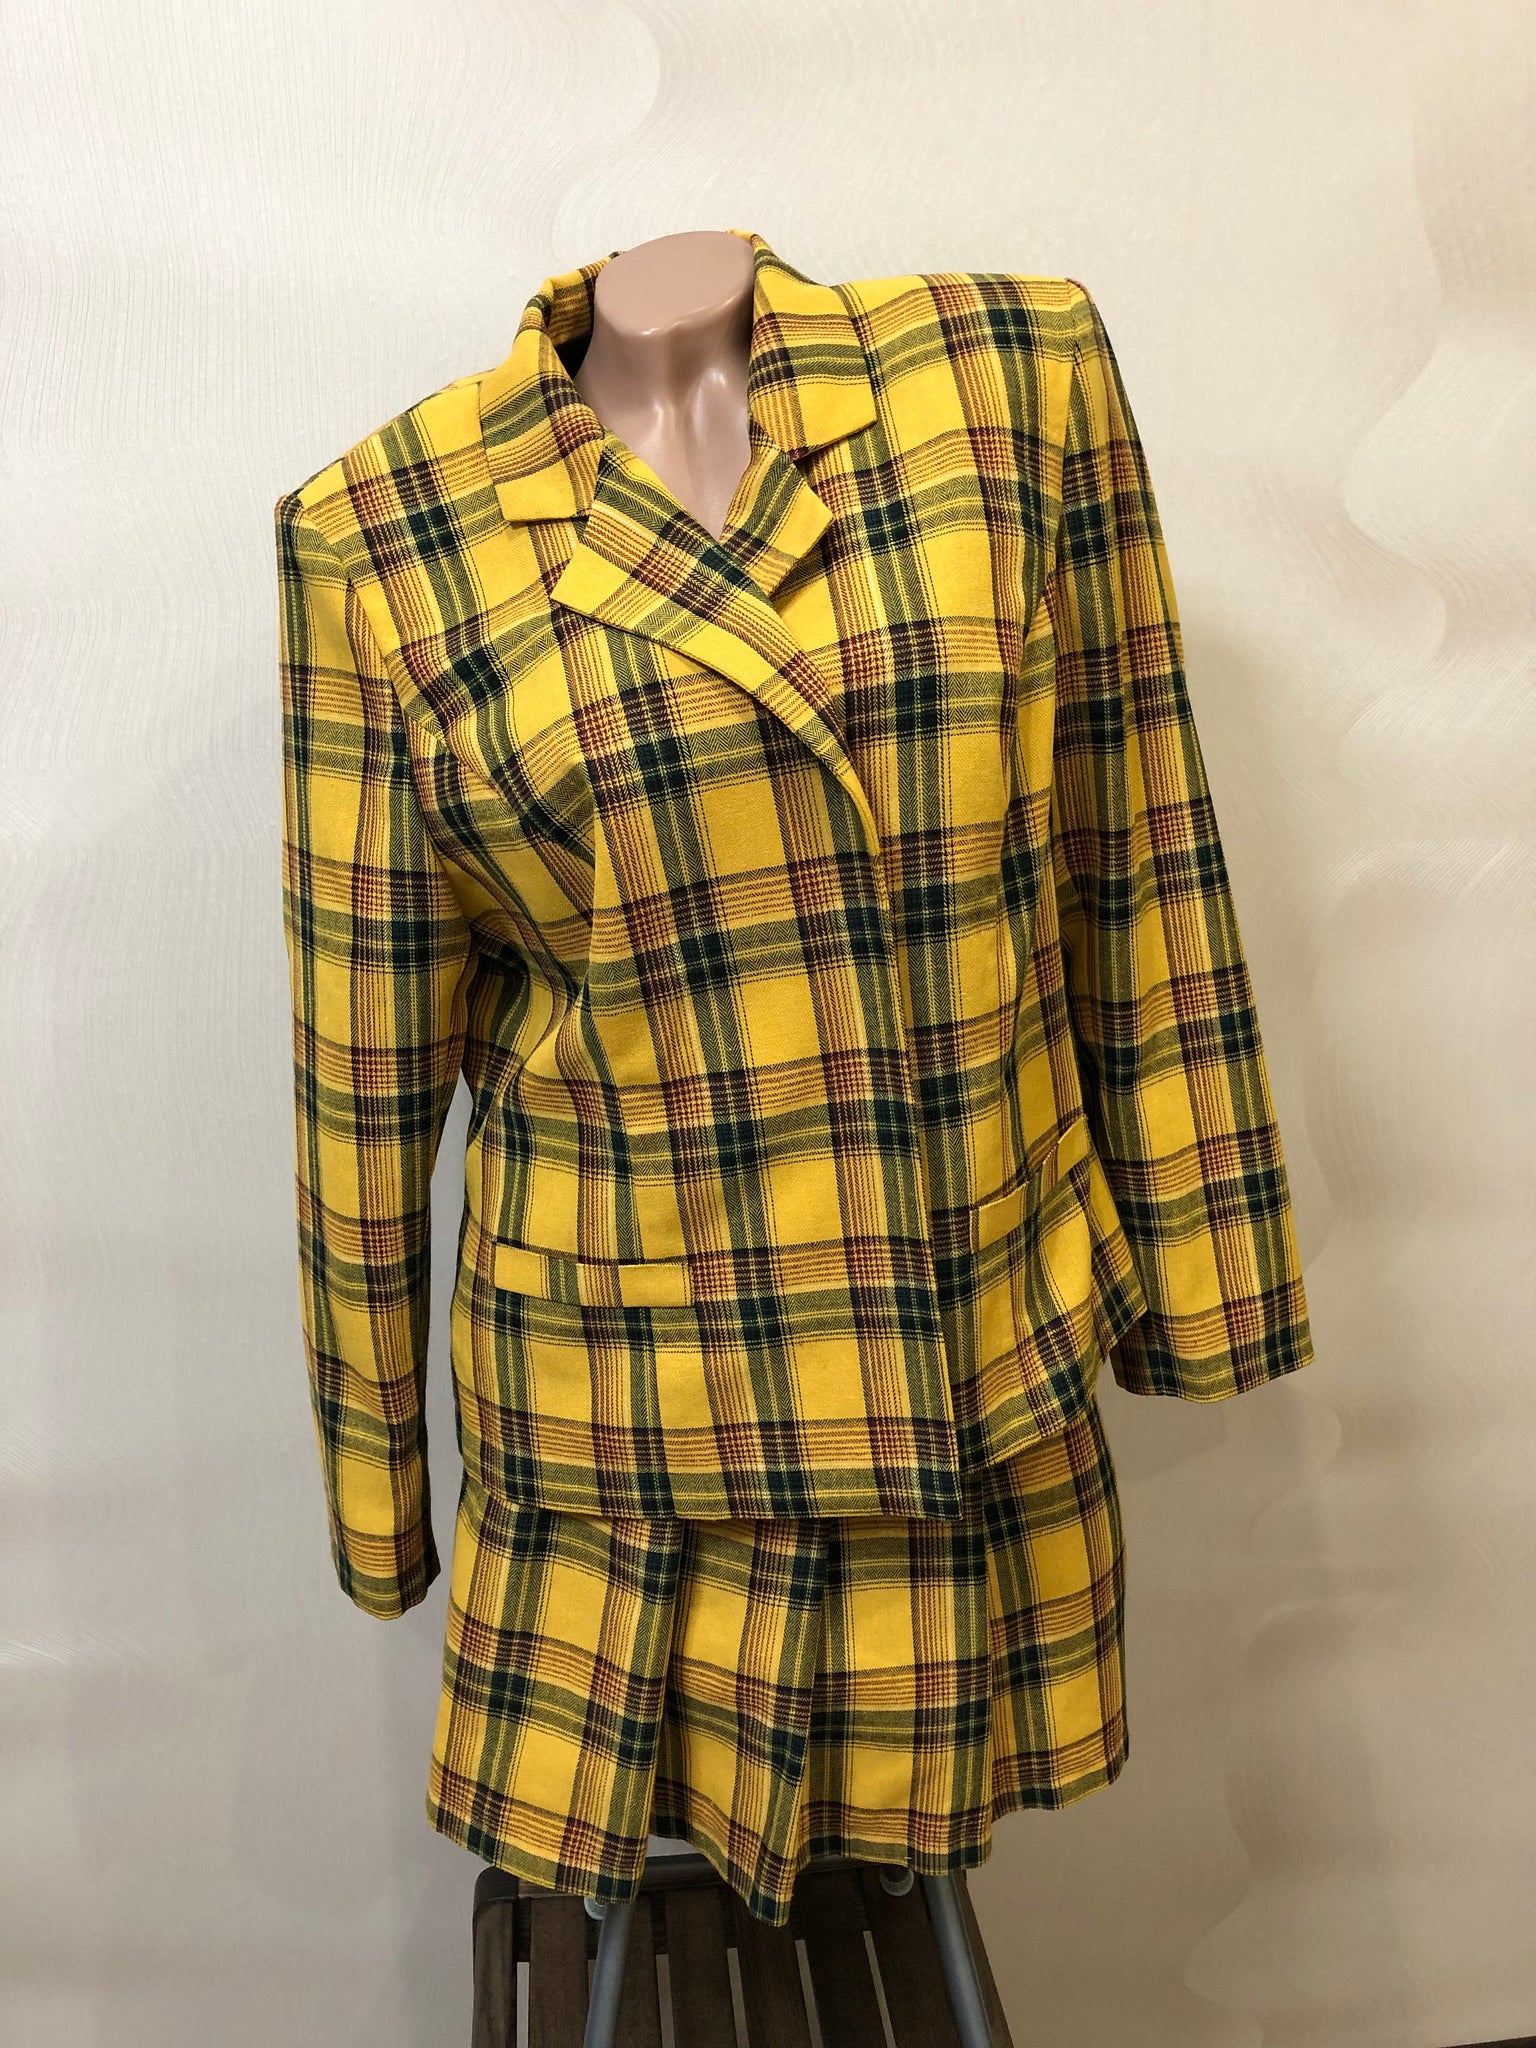 Clip #7 Clueless Cher Horowitz's Yellow Plaid Skirt Suit - YouTube